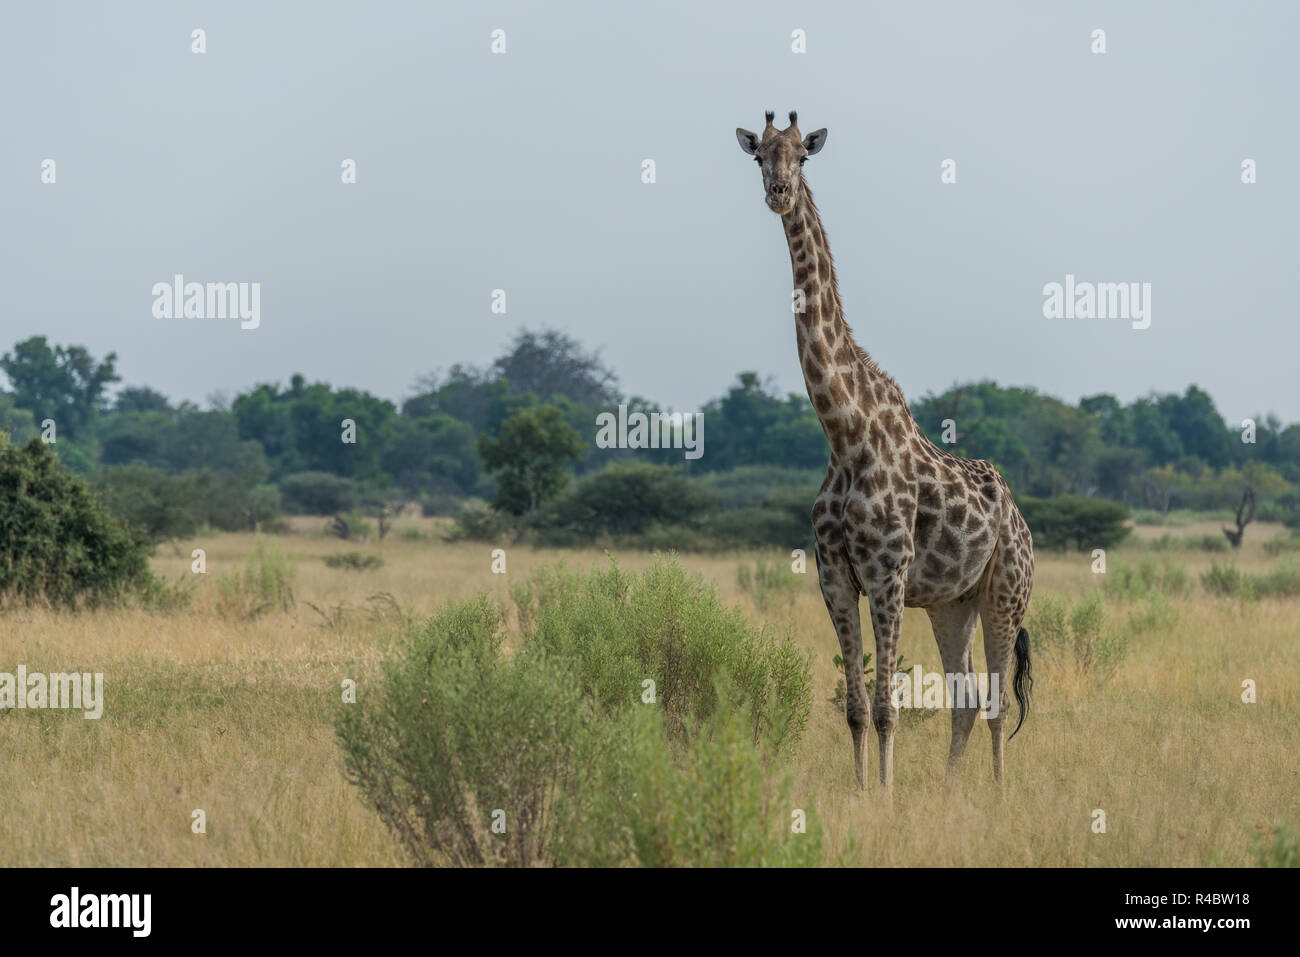 South African giraffe in savannah facing camera Stock Photo